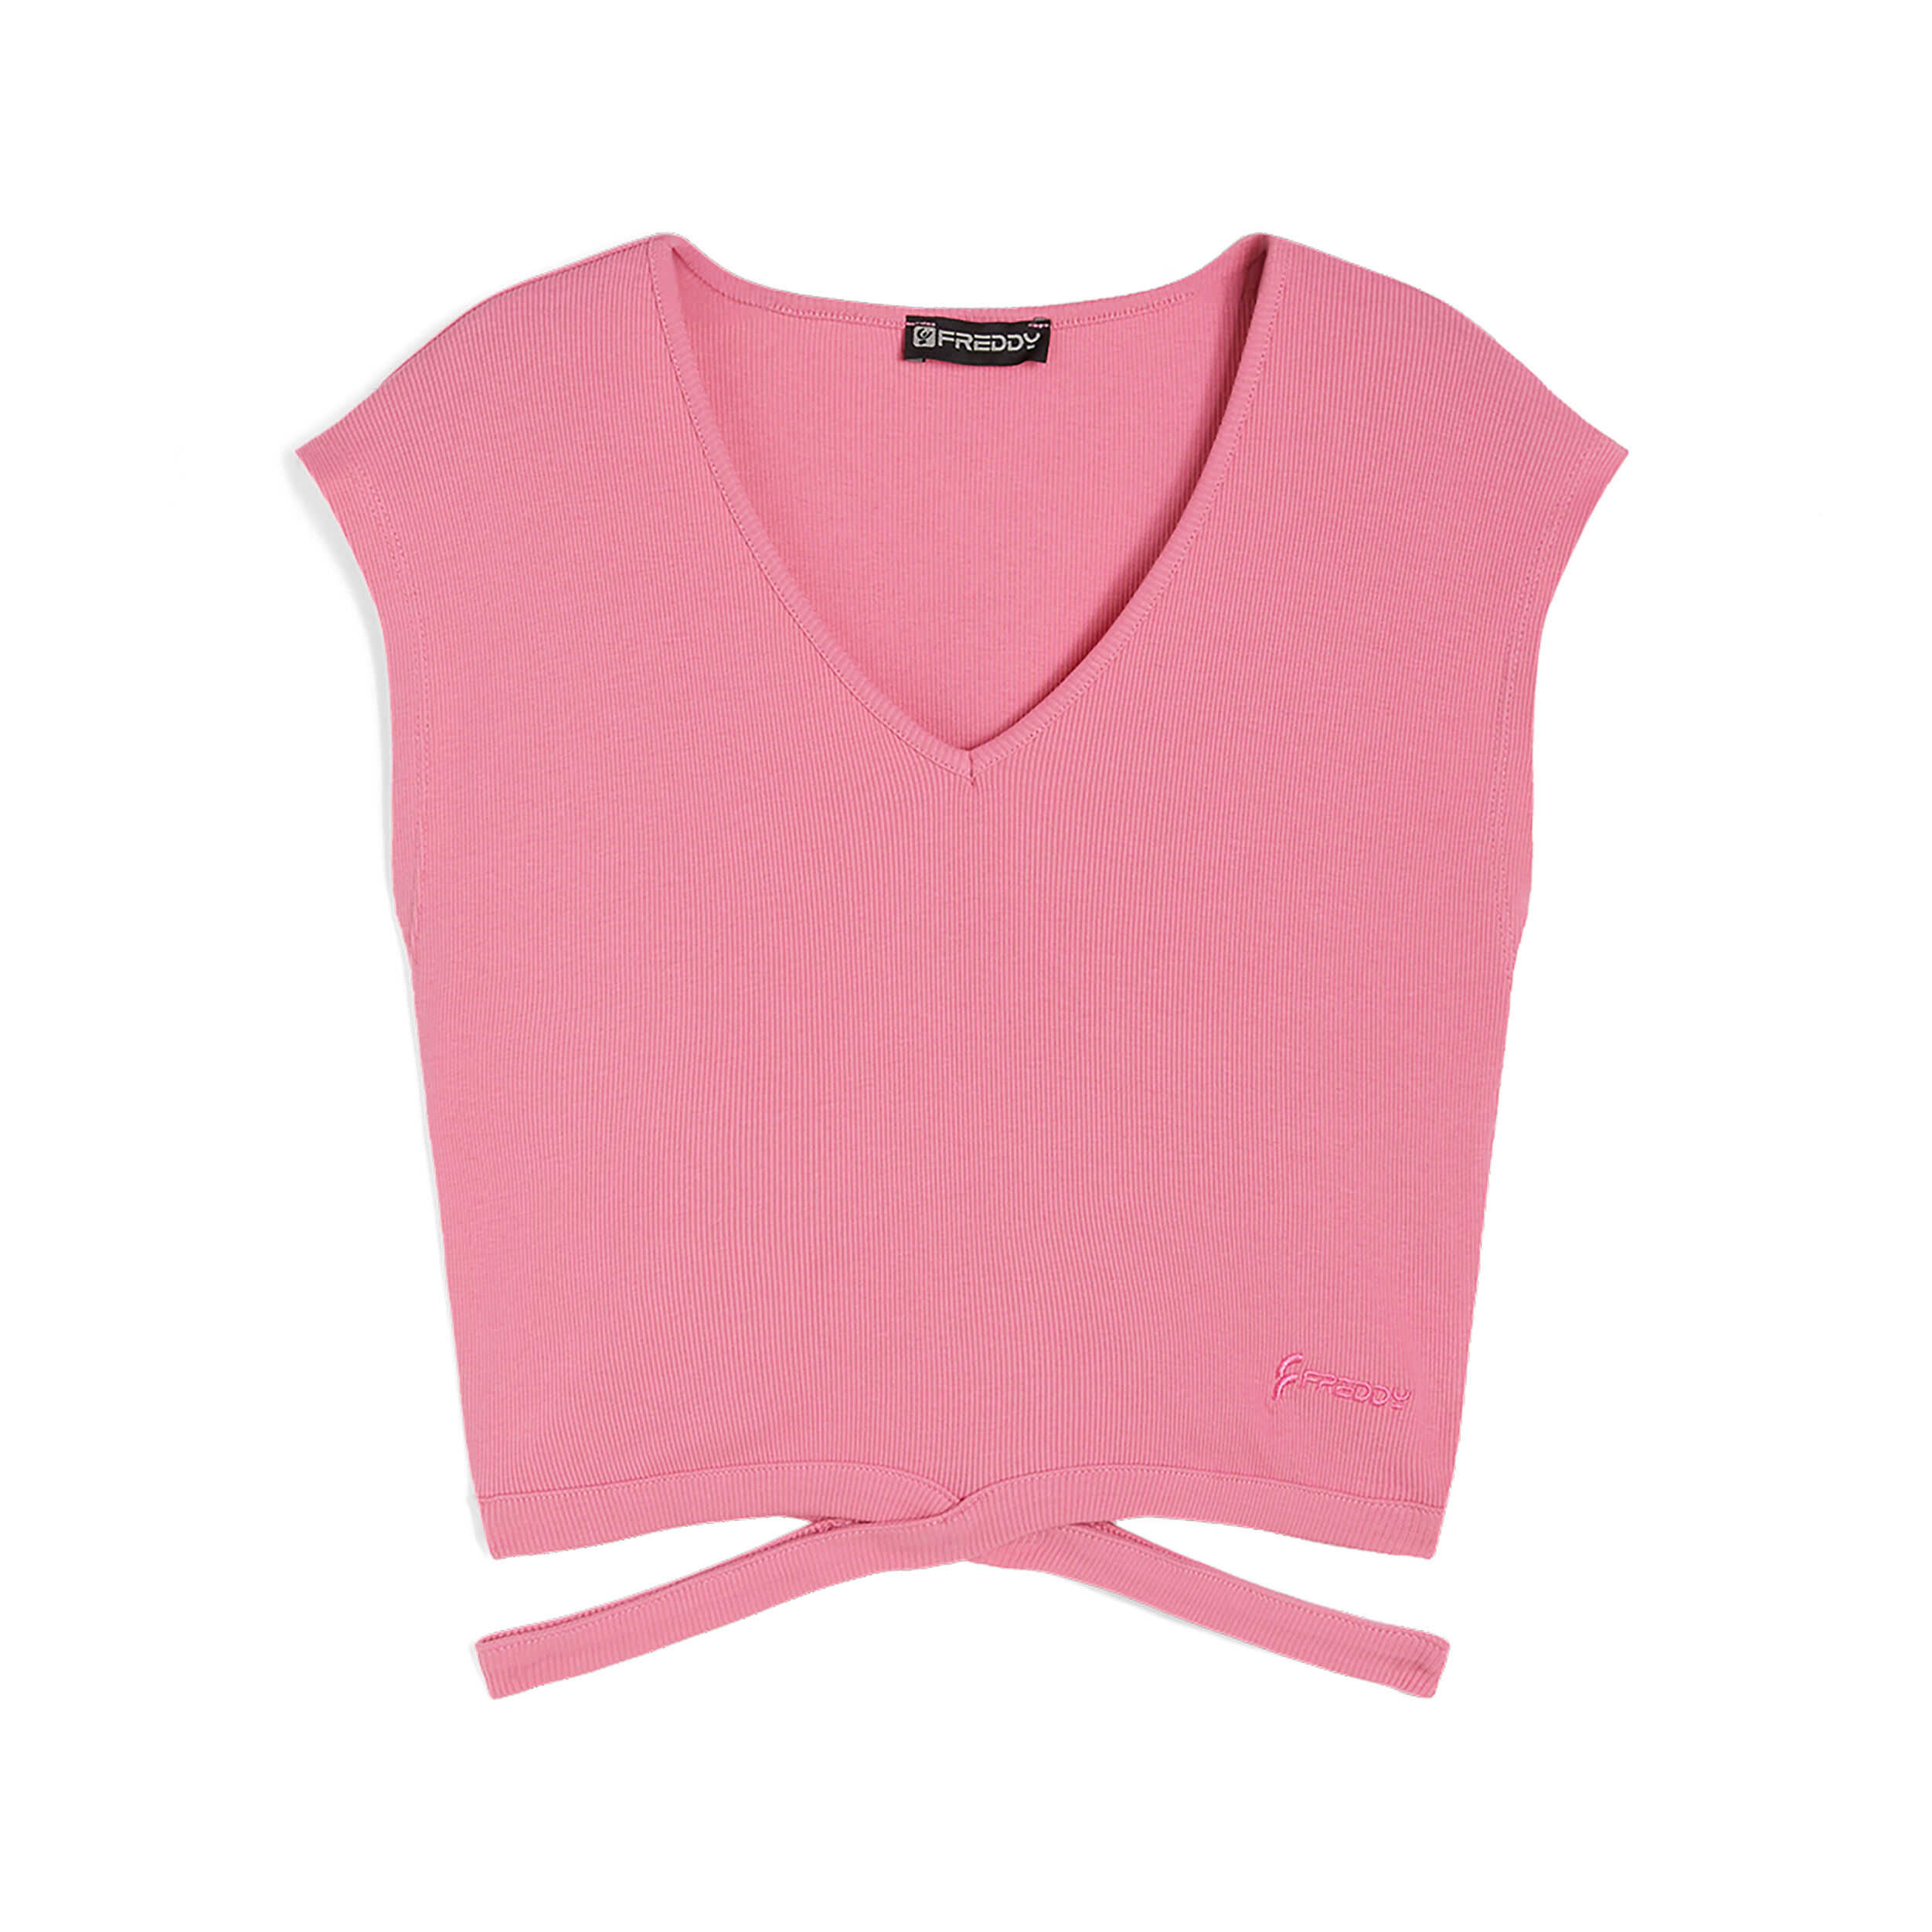 Freddy T-shirt slim fit in costina con gioco di incroci sul fondo Pink Carnation Donna Medium